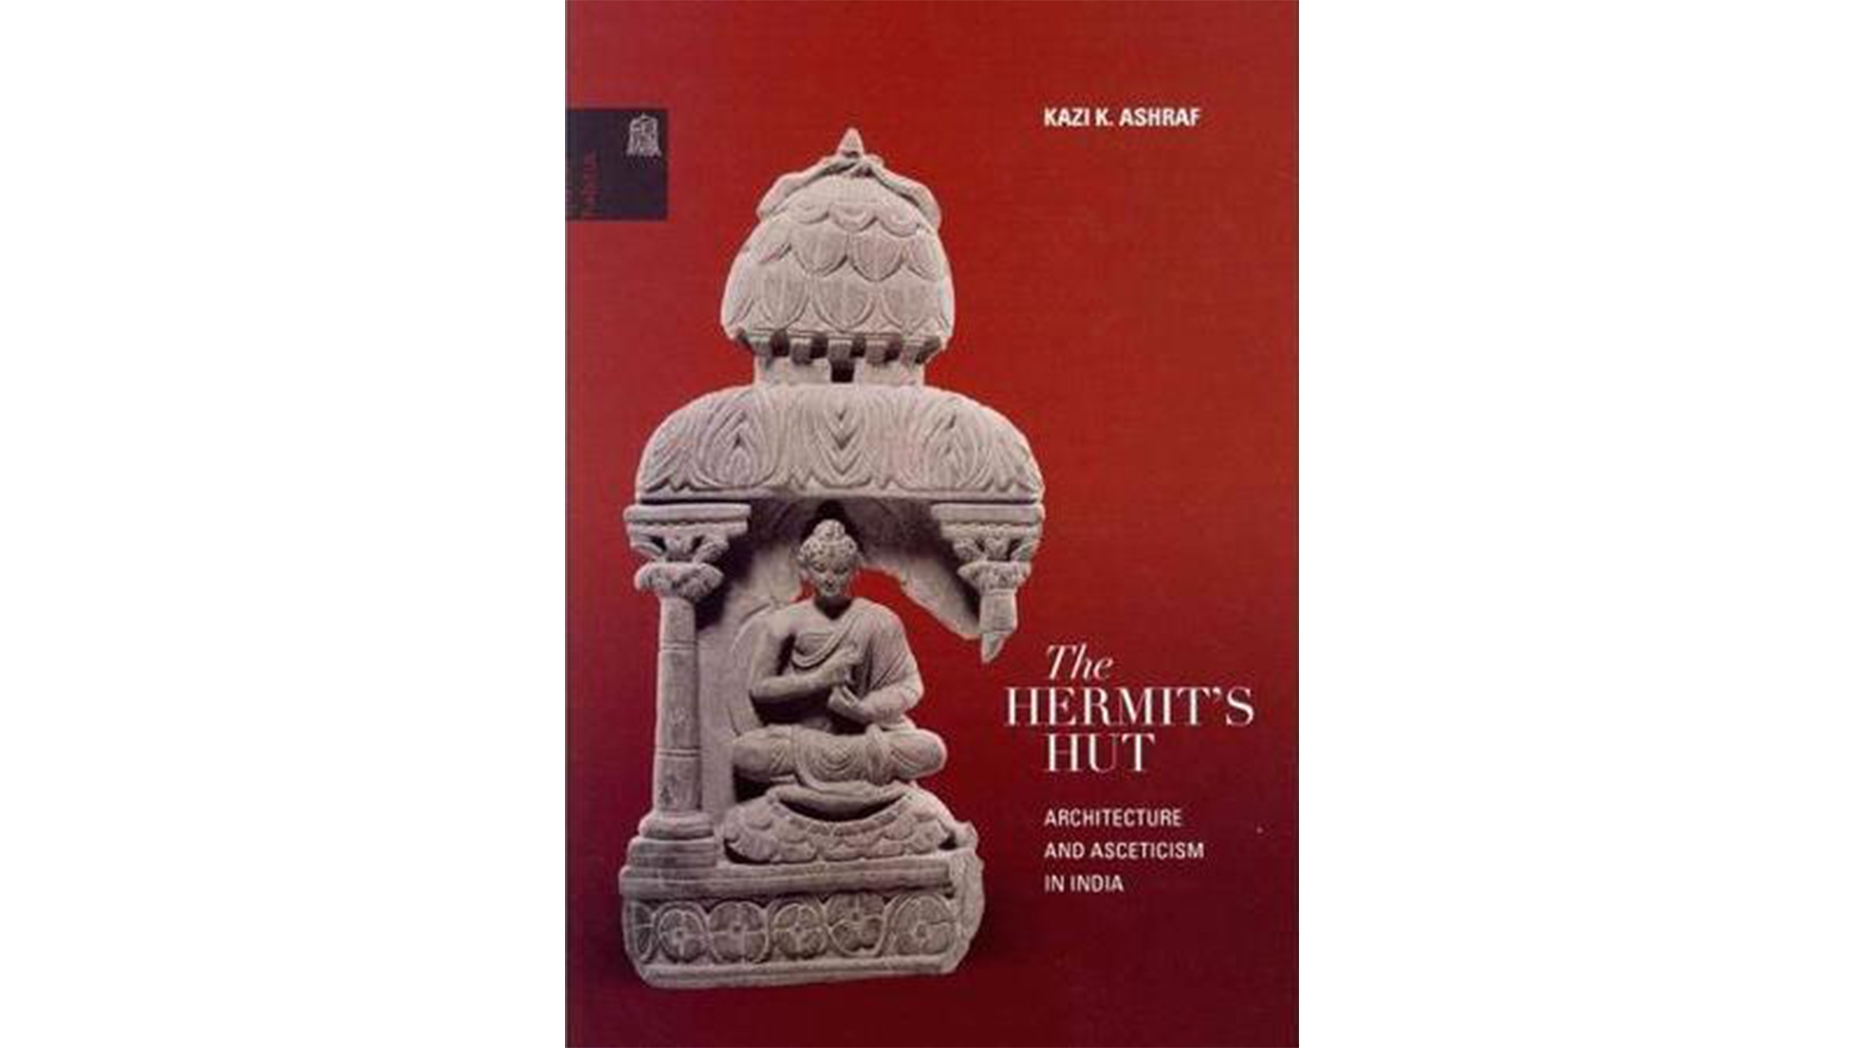 The Hermit's Hut book cover